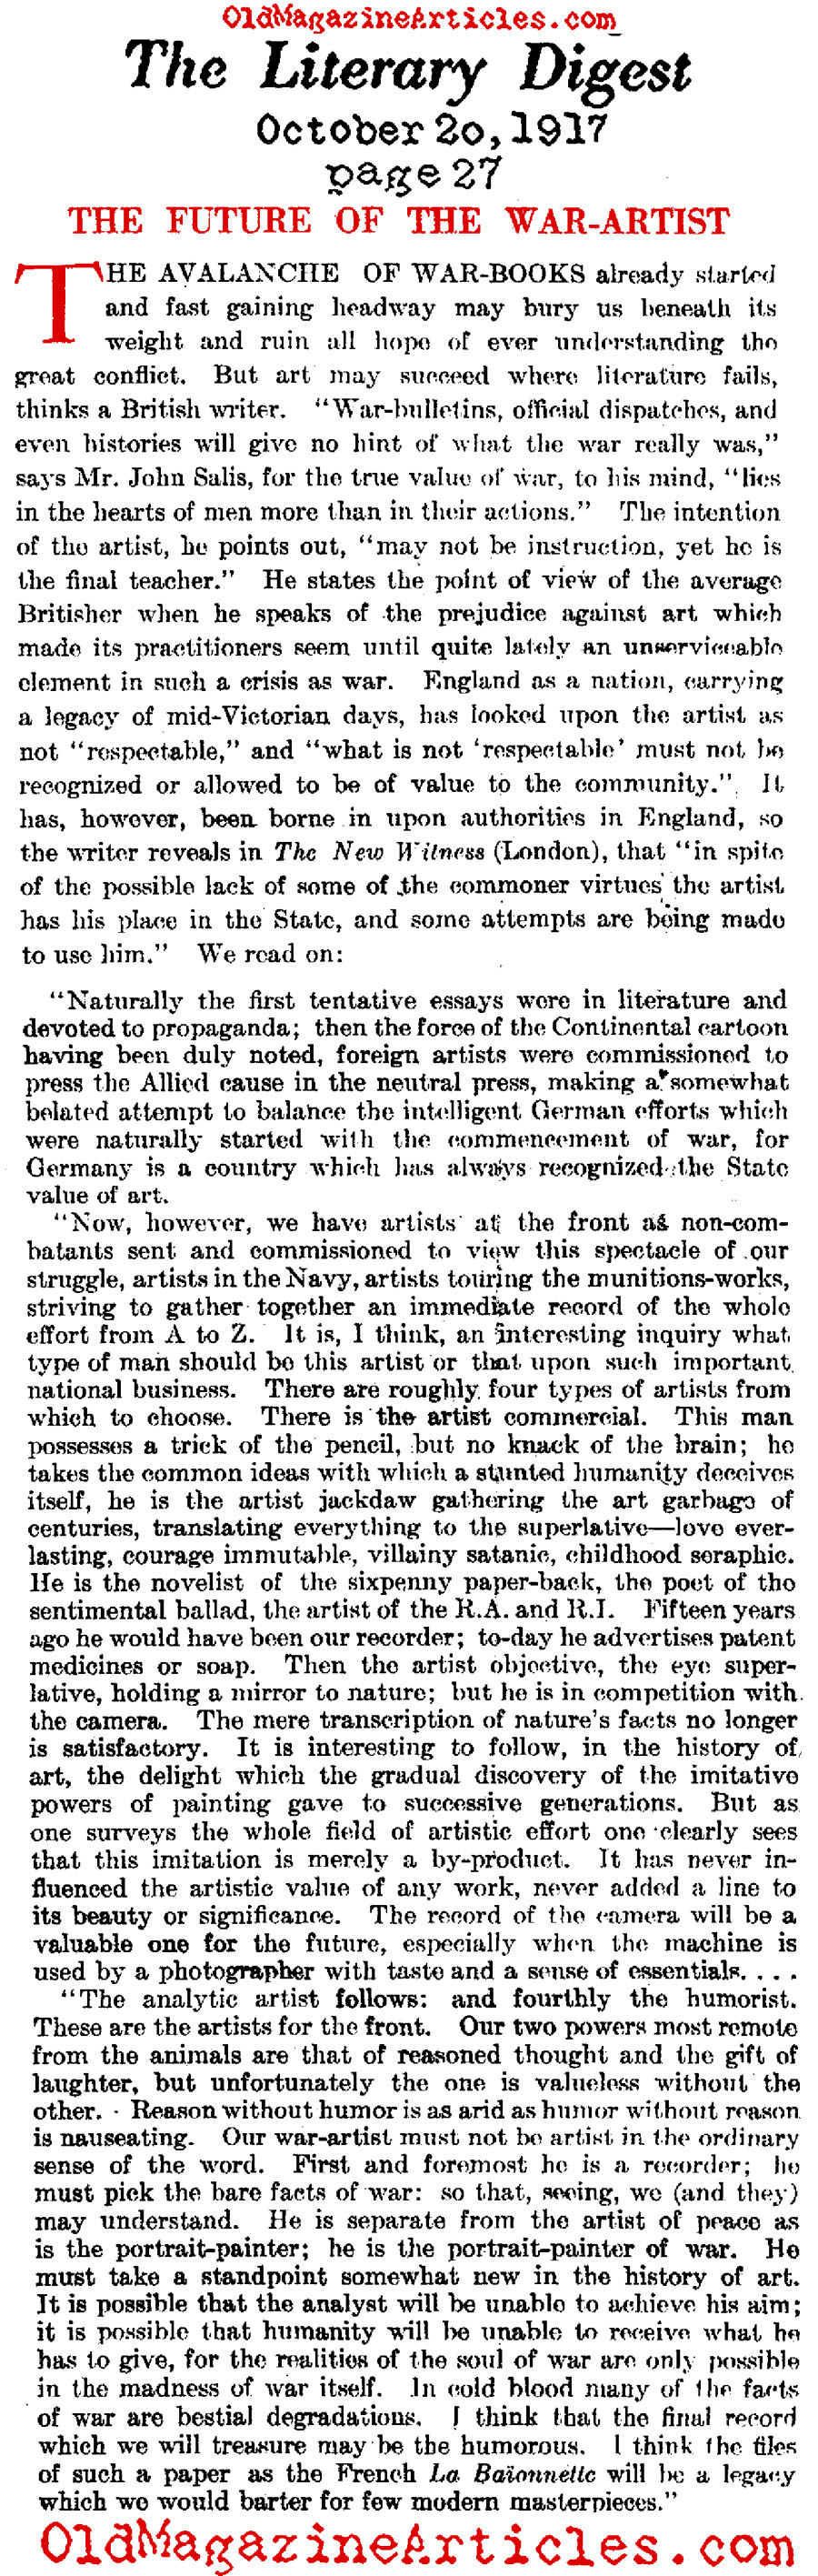 The Future of War-Artists (Literary Digest, 1917)